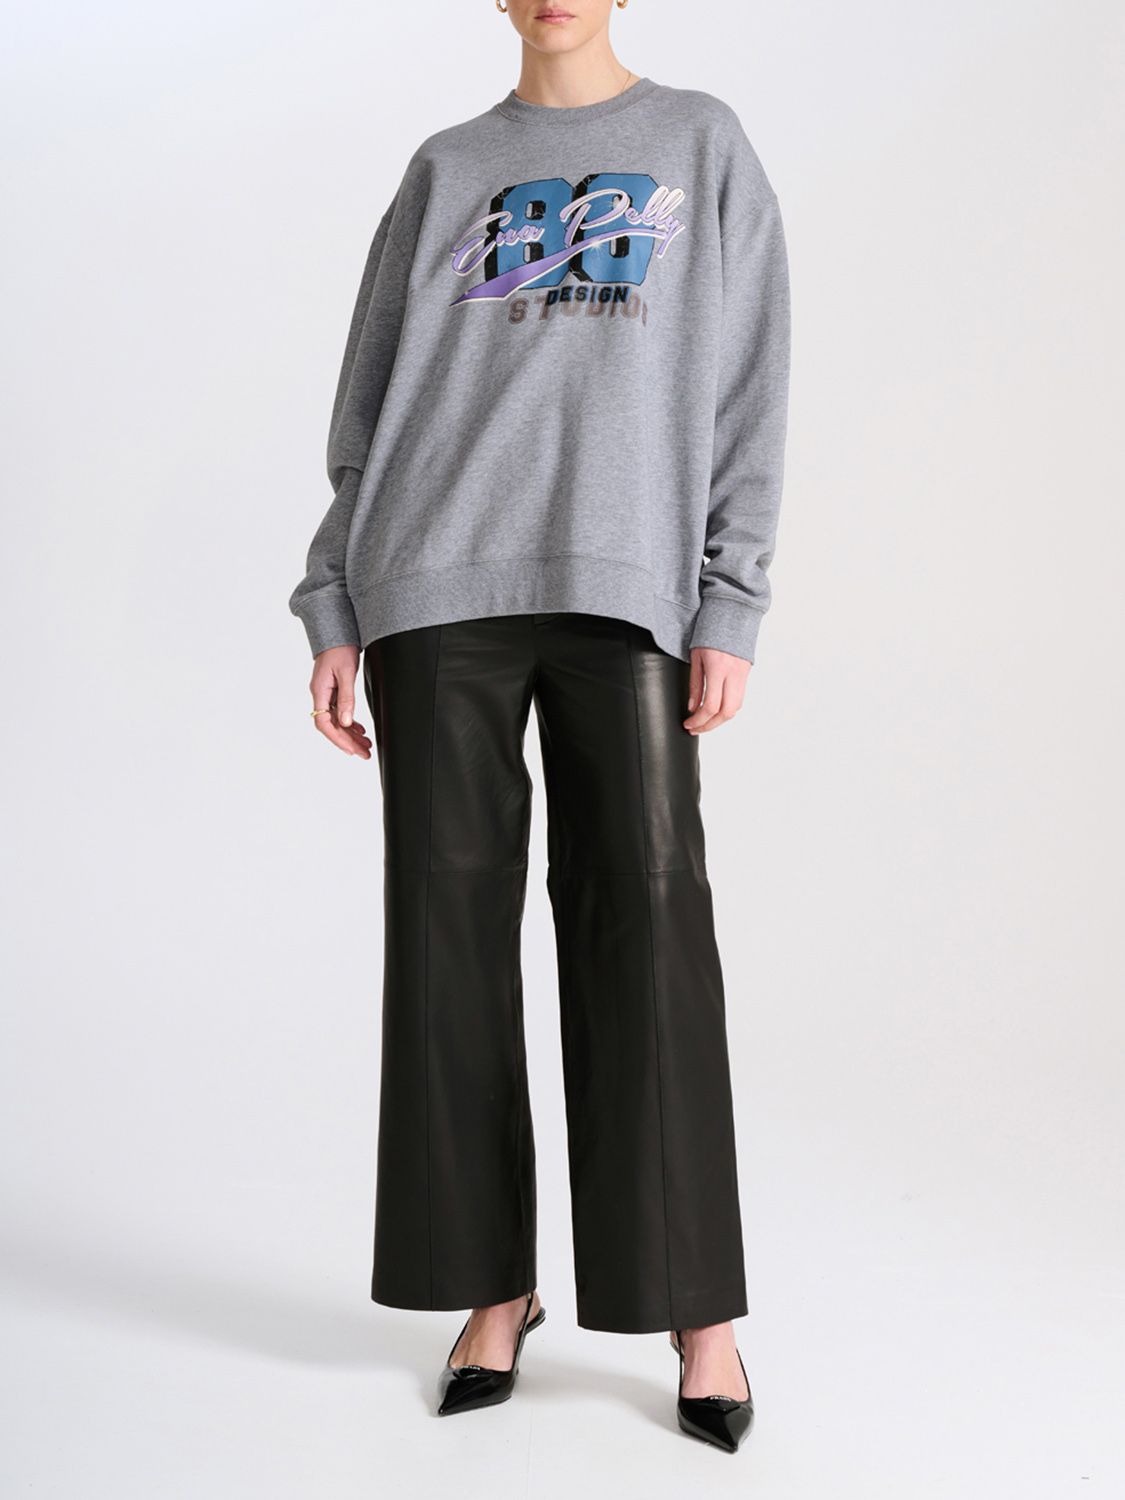 Design Studio 88 Sweater | Grey Marle